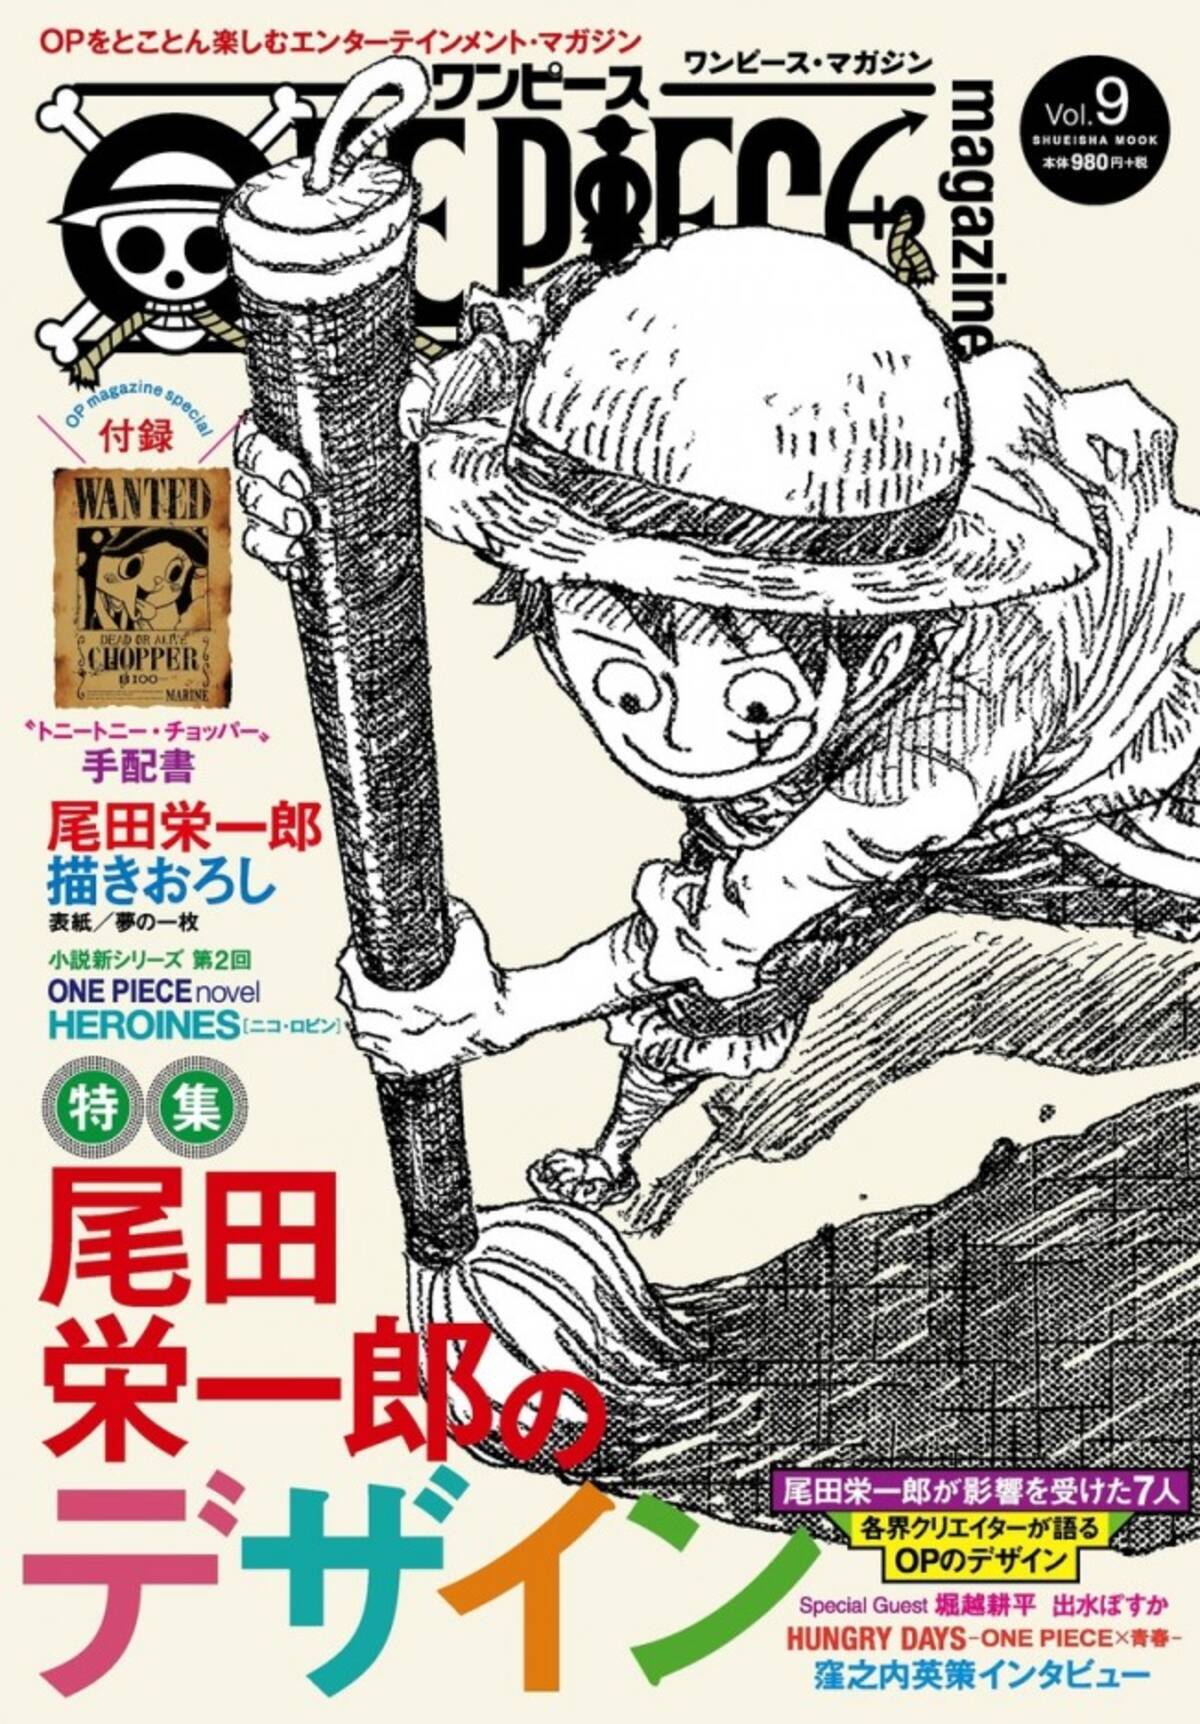 One Piece Magazine Vol 9 4 24発売 ヒロアカ 堀越耕平描き下ろしイラスト収録 年4月24日 エキサイトニュース